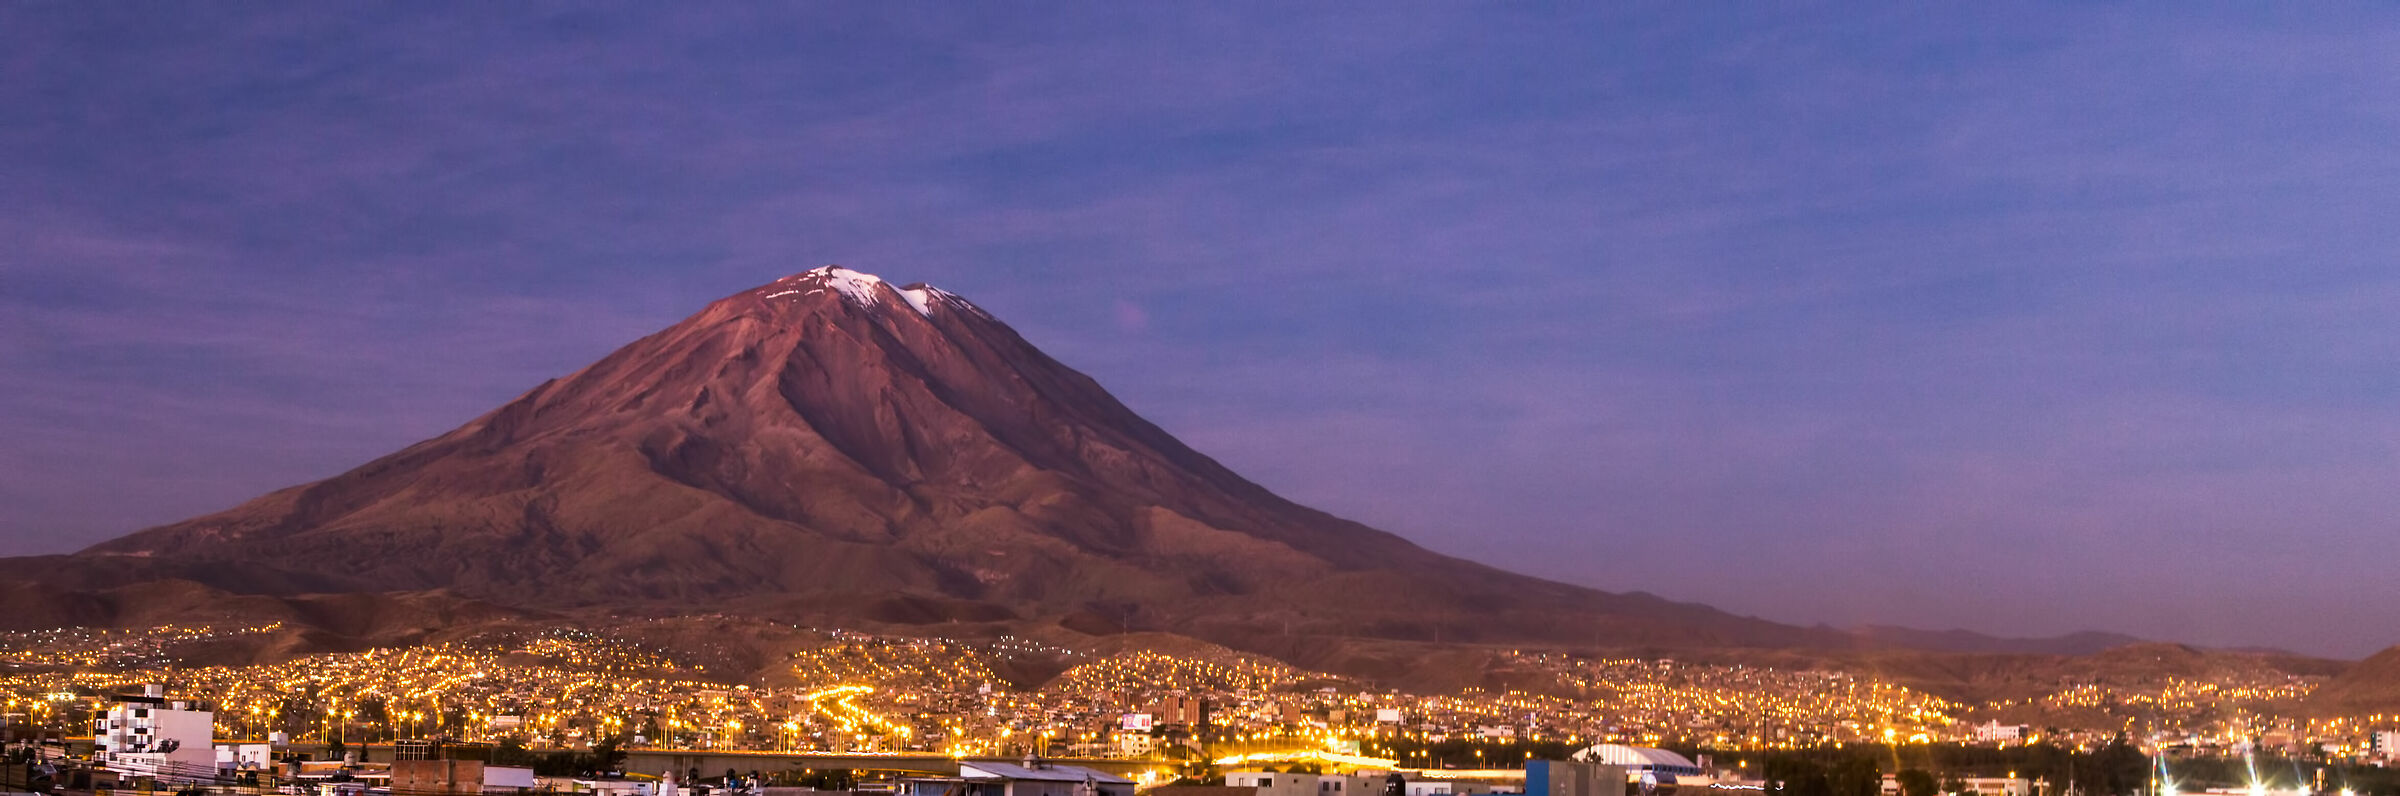 Volcano El Mismi with Arequipa by night...